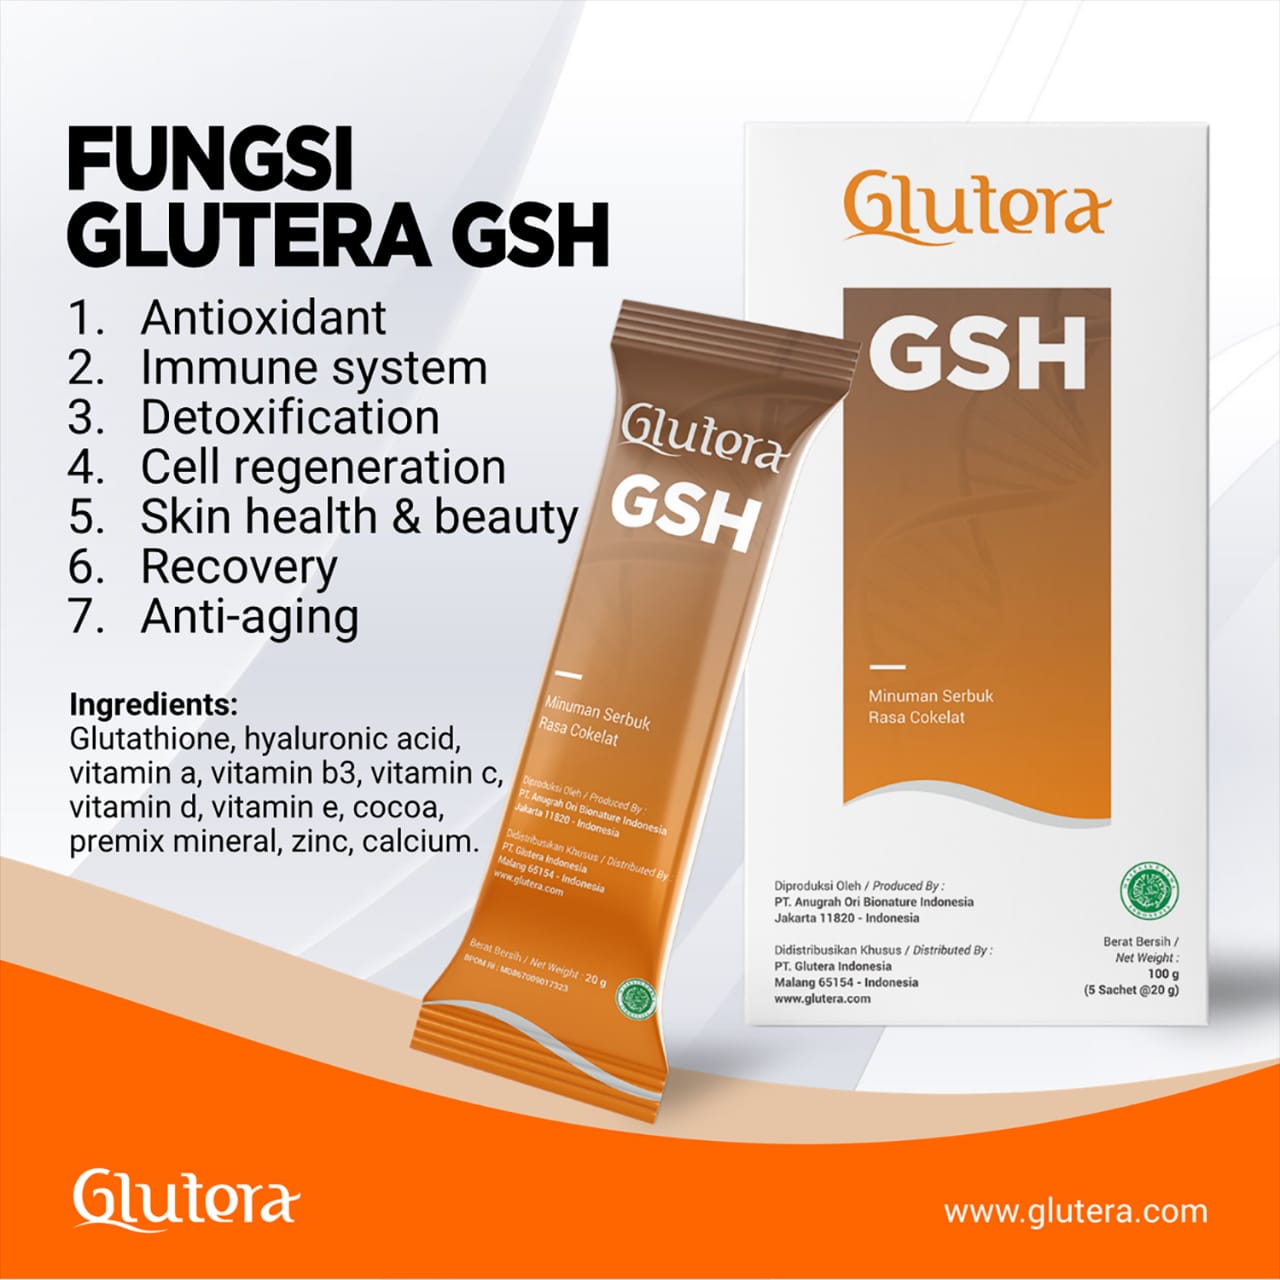 Funsi-Glutera-GSH.jpg